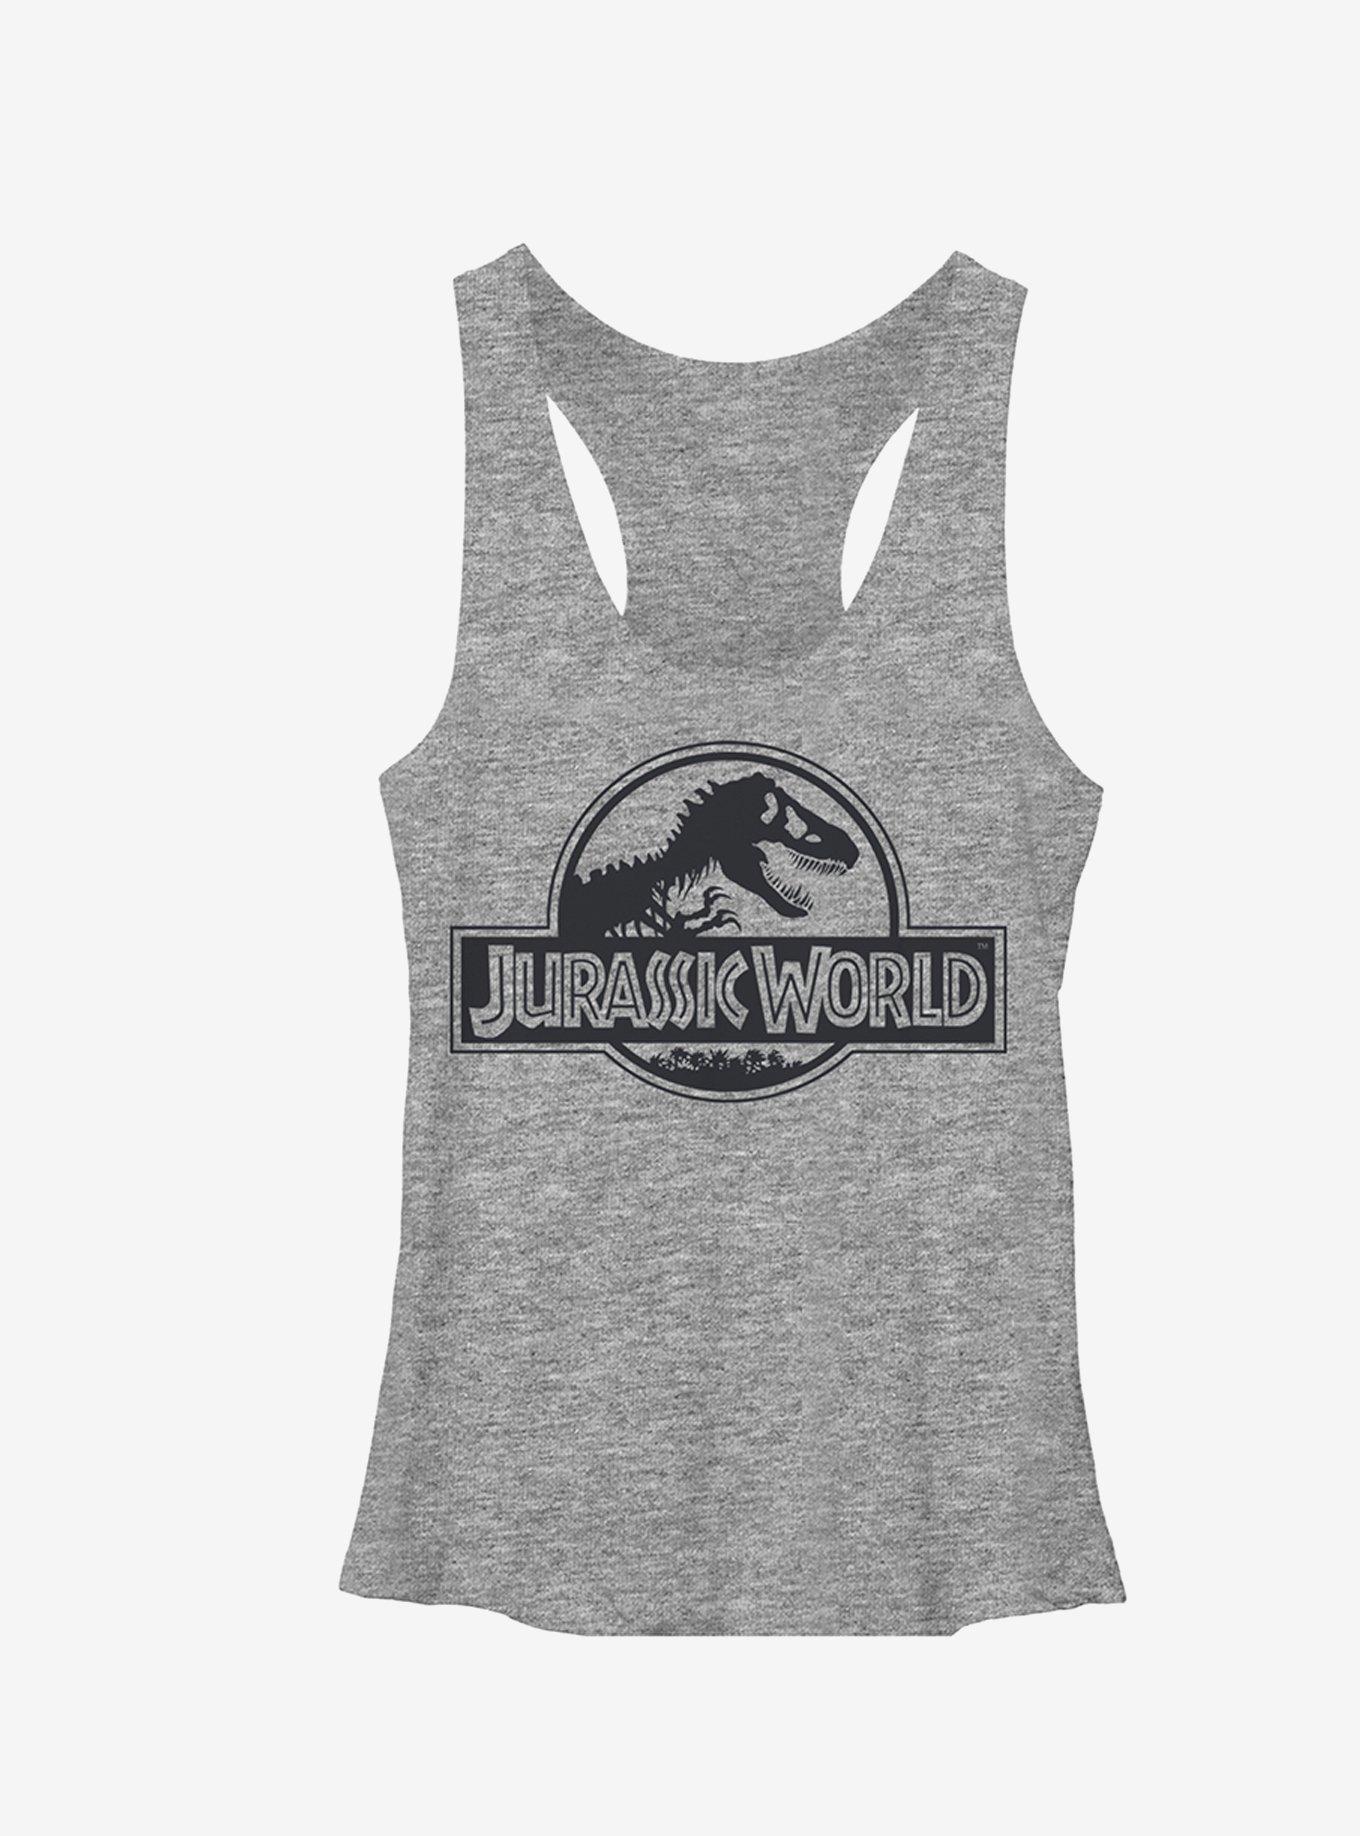 Jurassic World Grey Logo Girls Tank Top